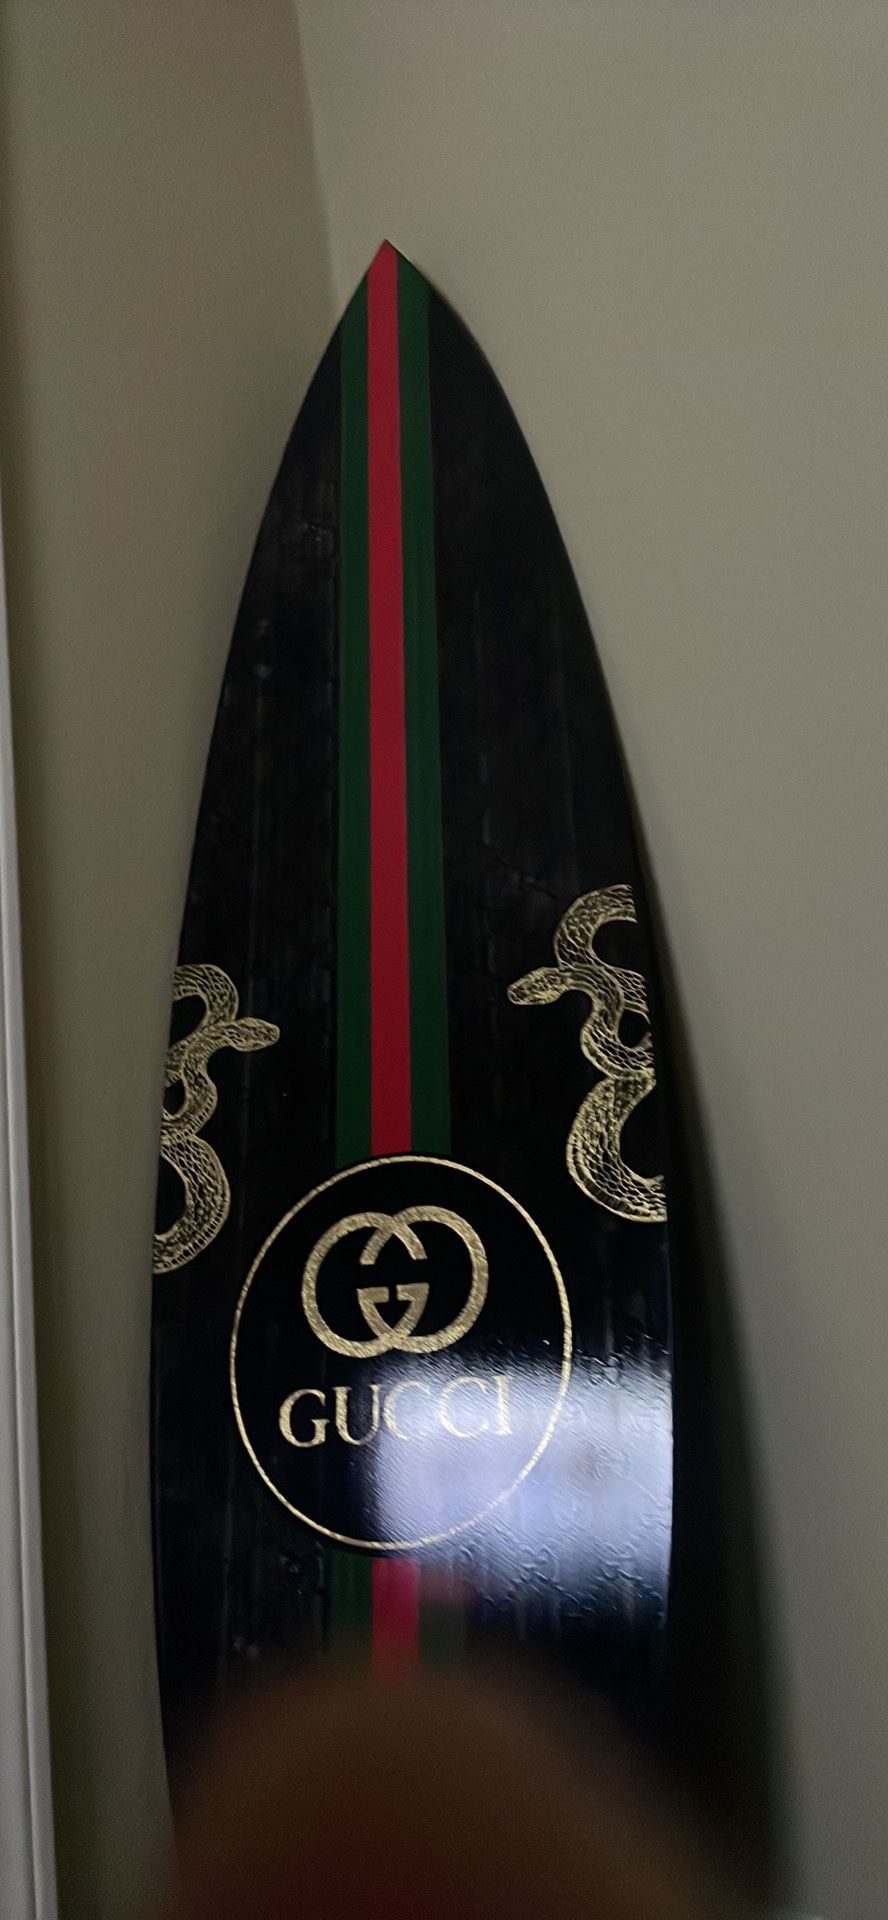 Gucci surfboard 